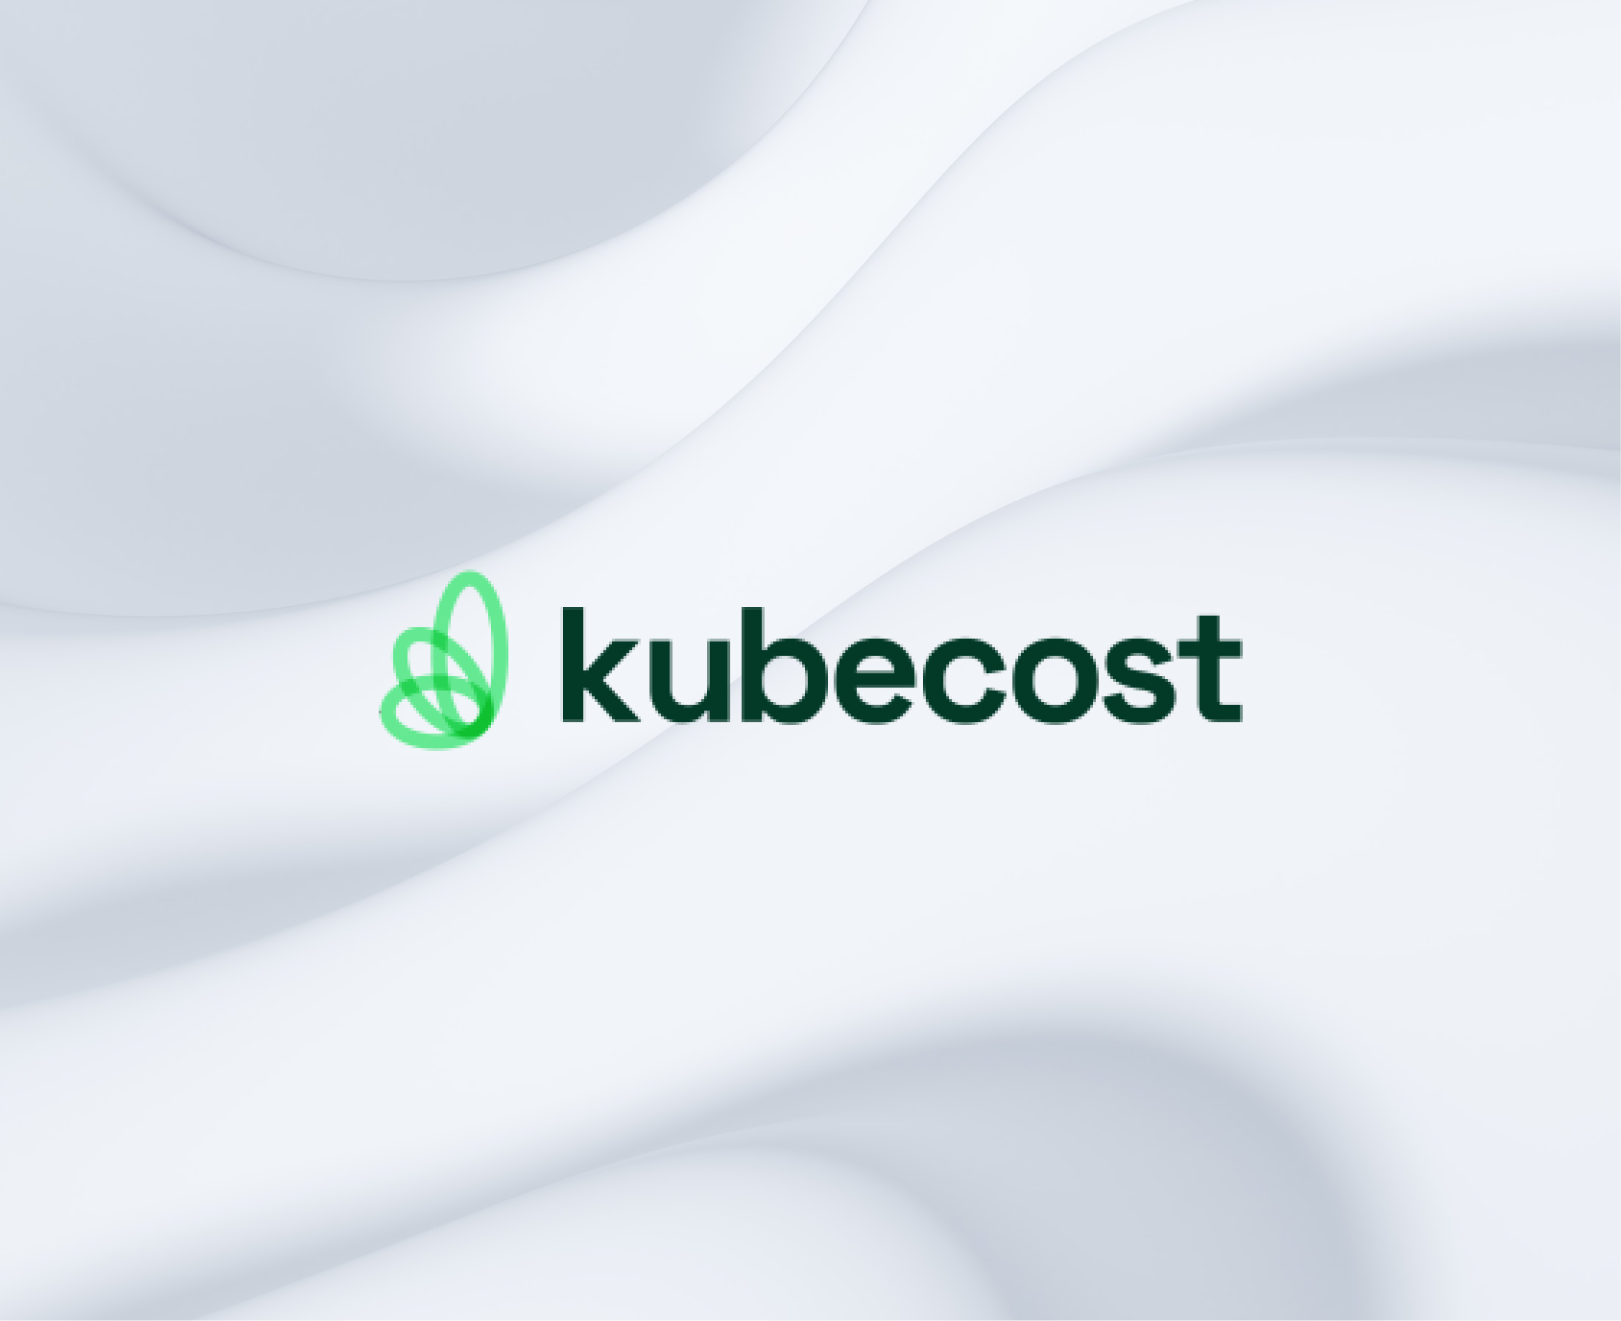 Is Kubecost worth it?